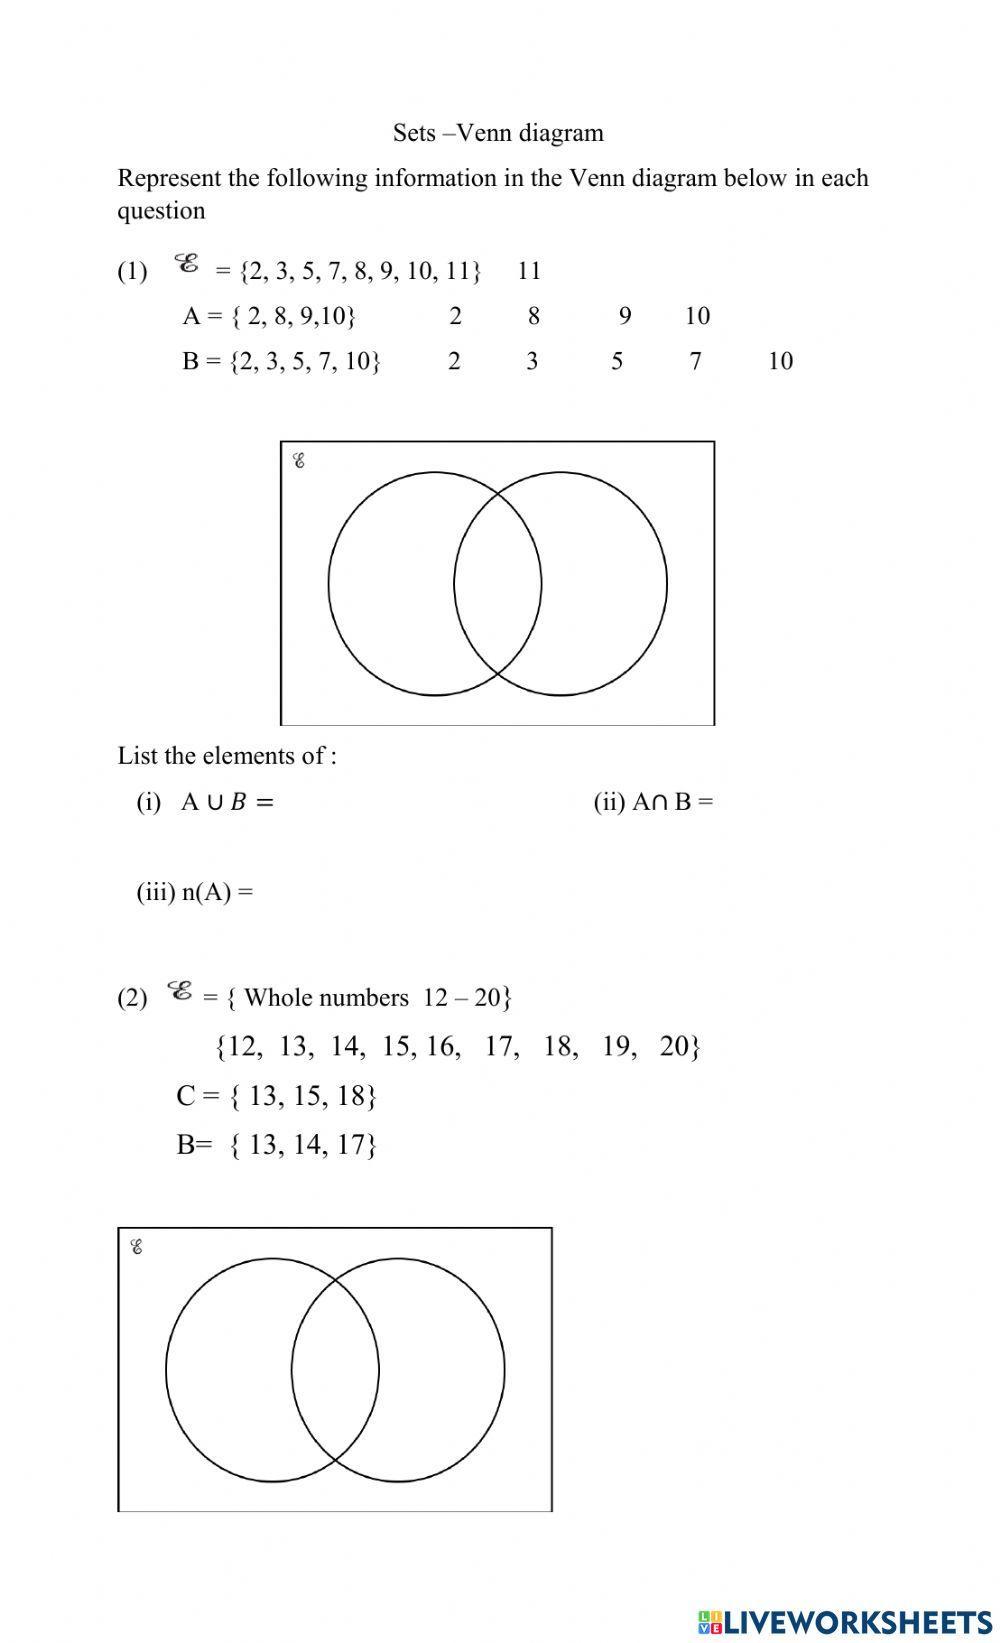 Representing information in A Venn diagram